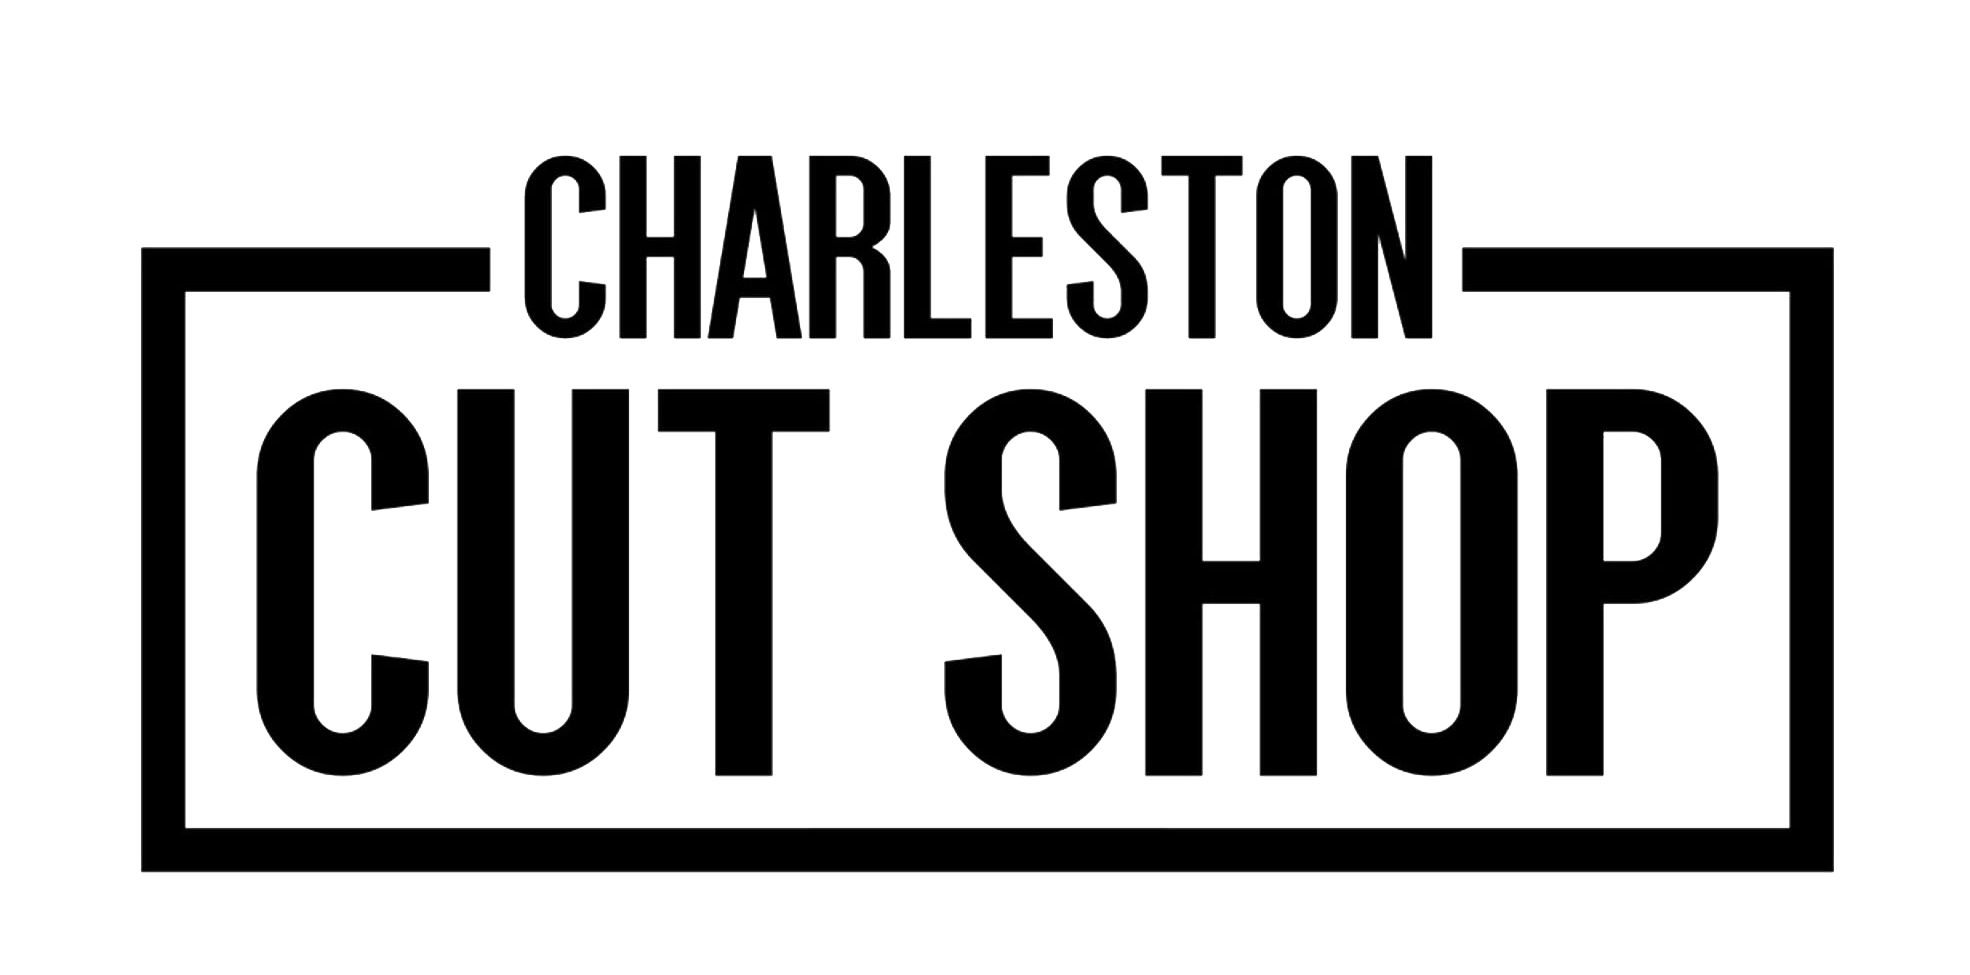 Charleston Cut Shop